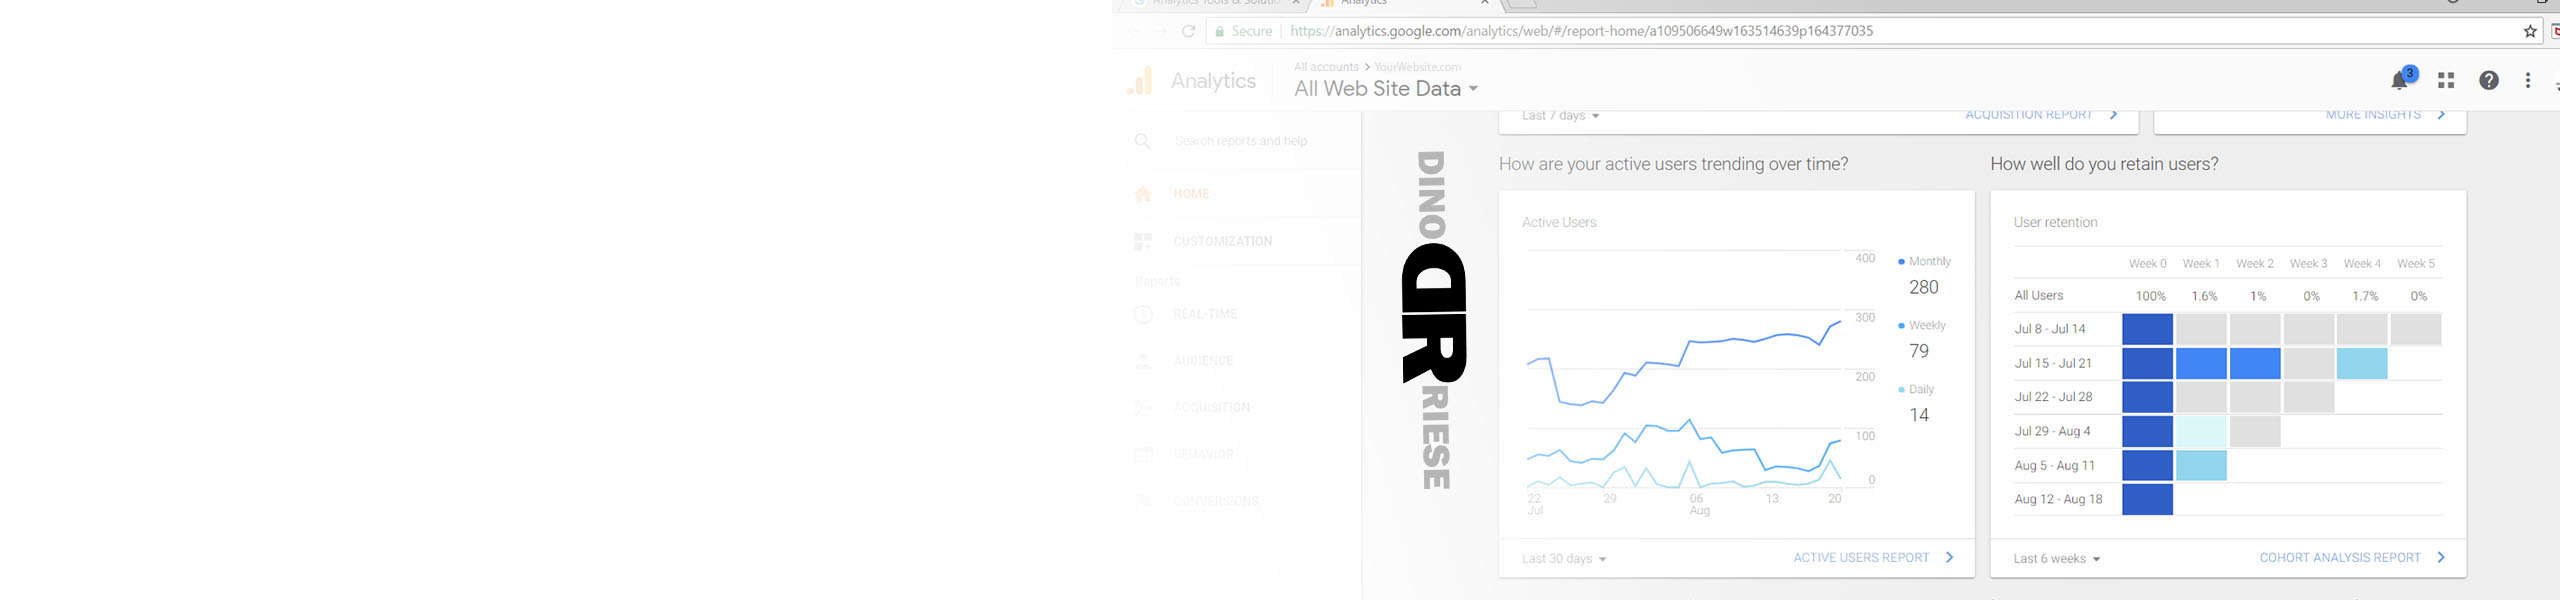 Google Analytics inams | DinoRiese.com